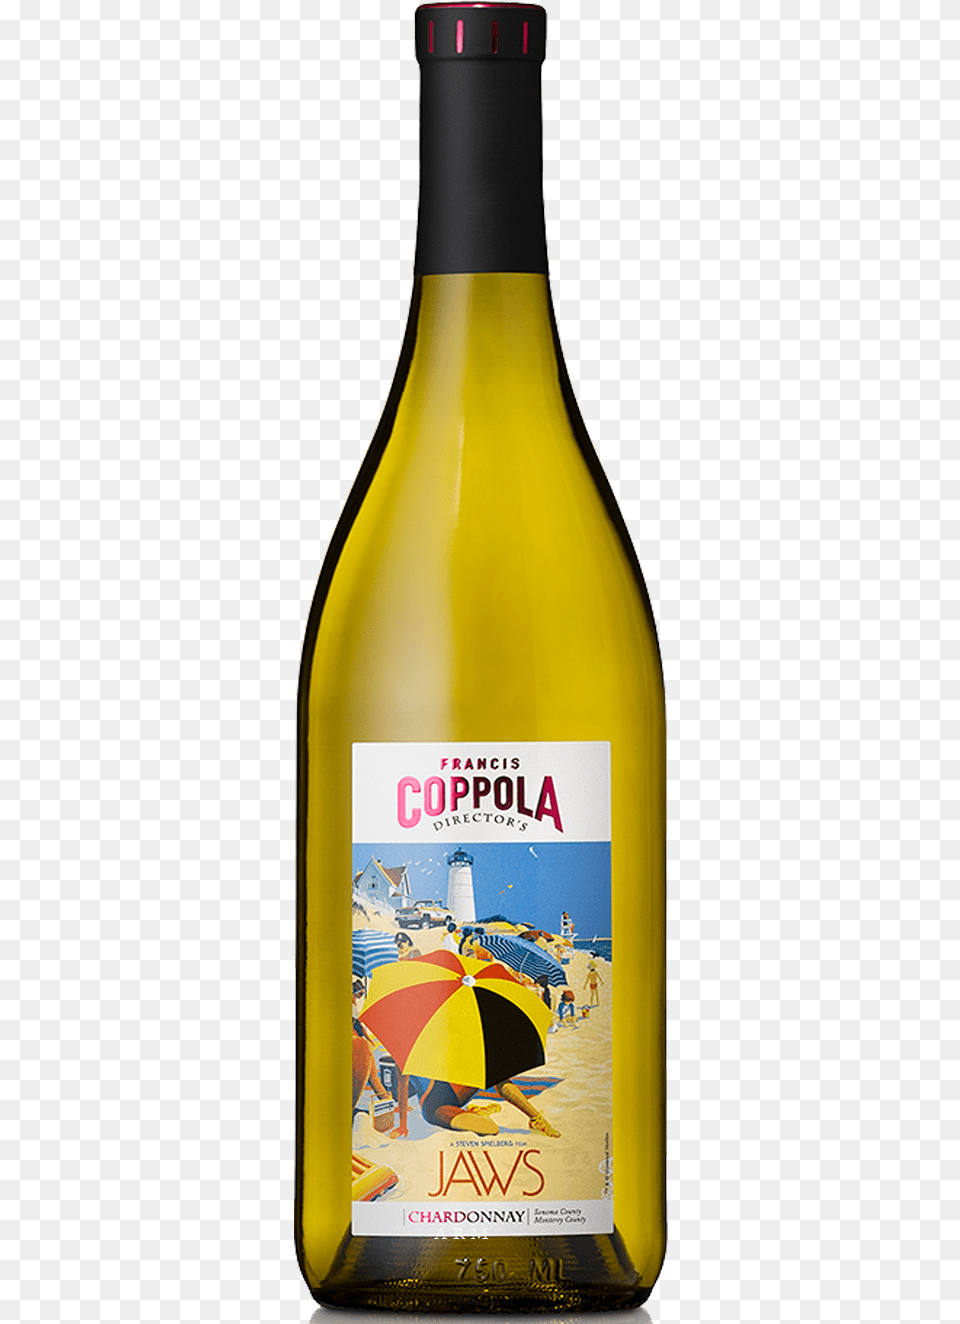 Francis Coppola Chardonnay Jaws, Bottle, Alcohol, Beer, Beverage Png Image